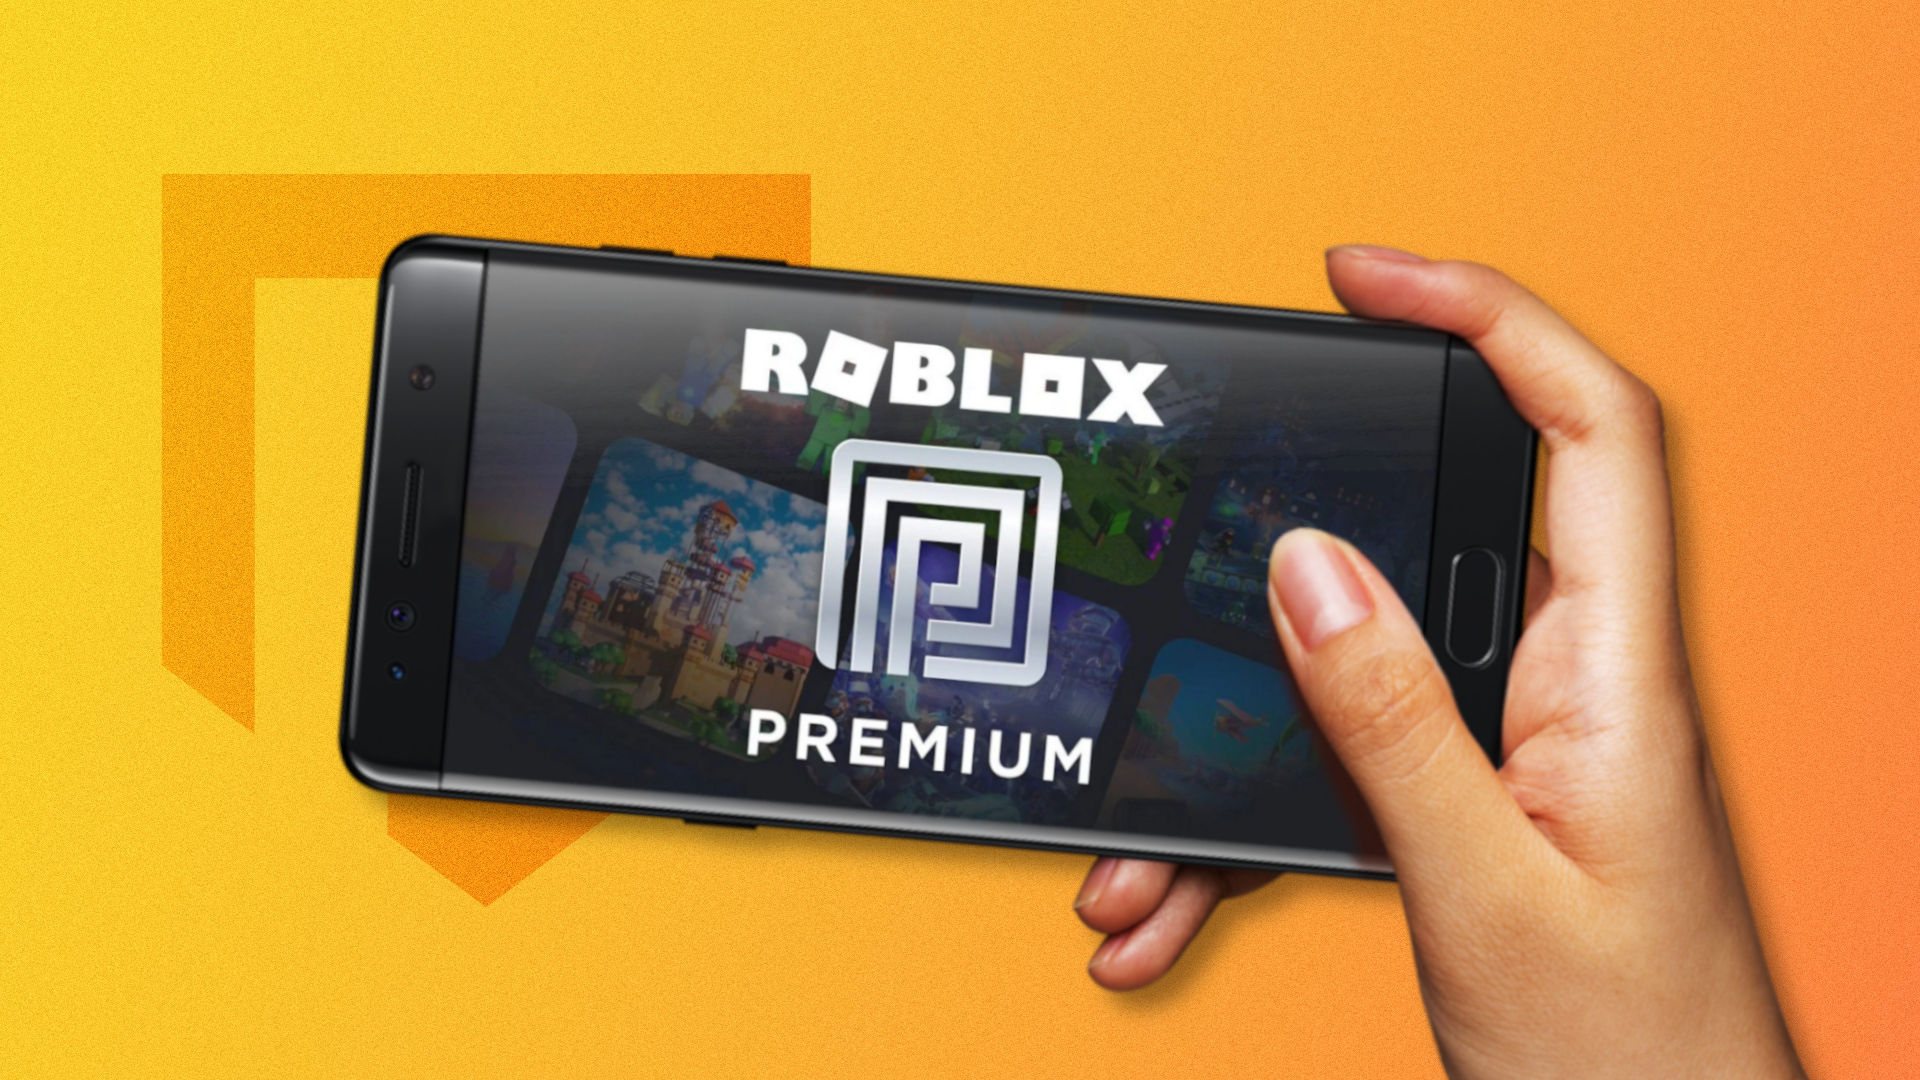 Roblox Premium 1 Month + 450 / 1000 / 2200 Robux, Tickets